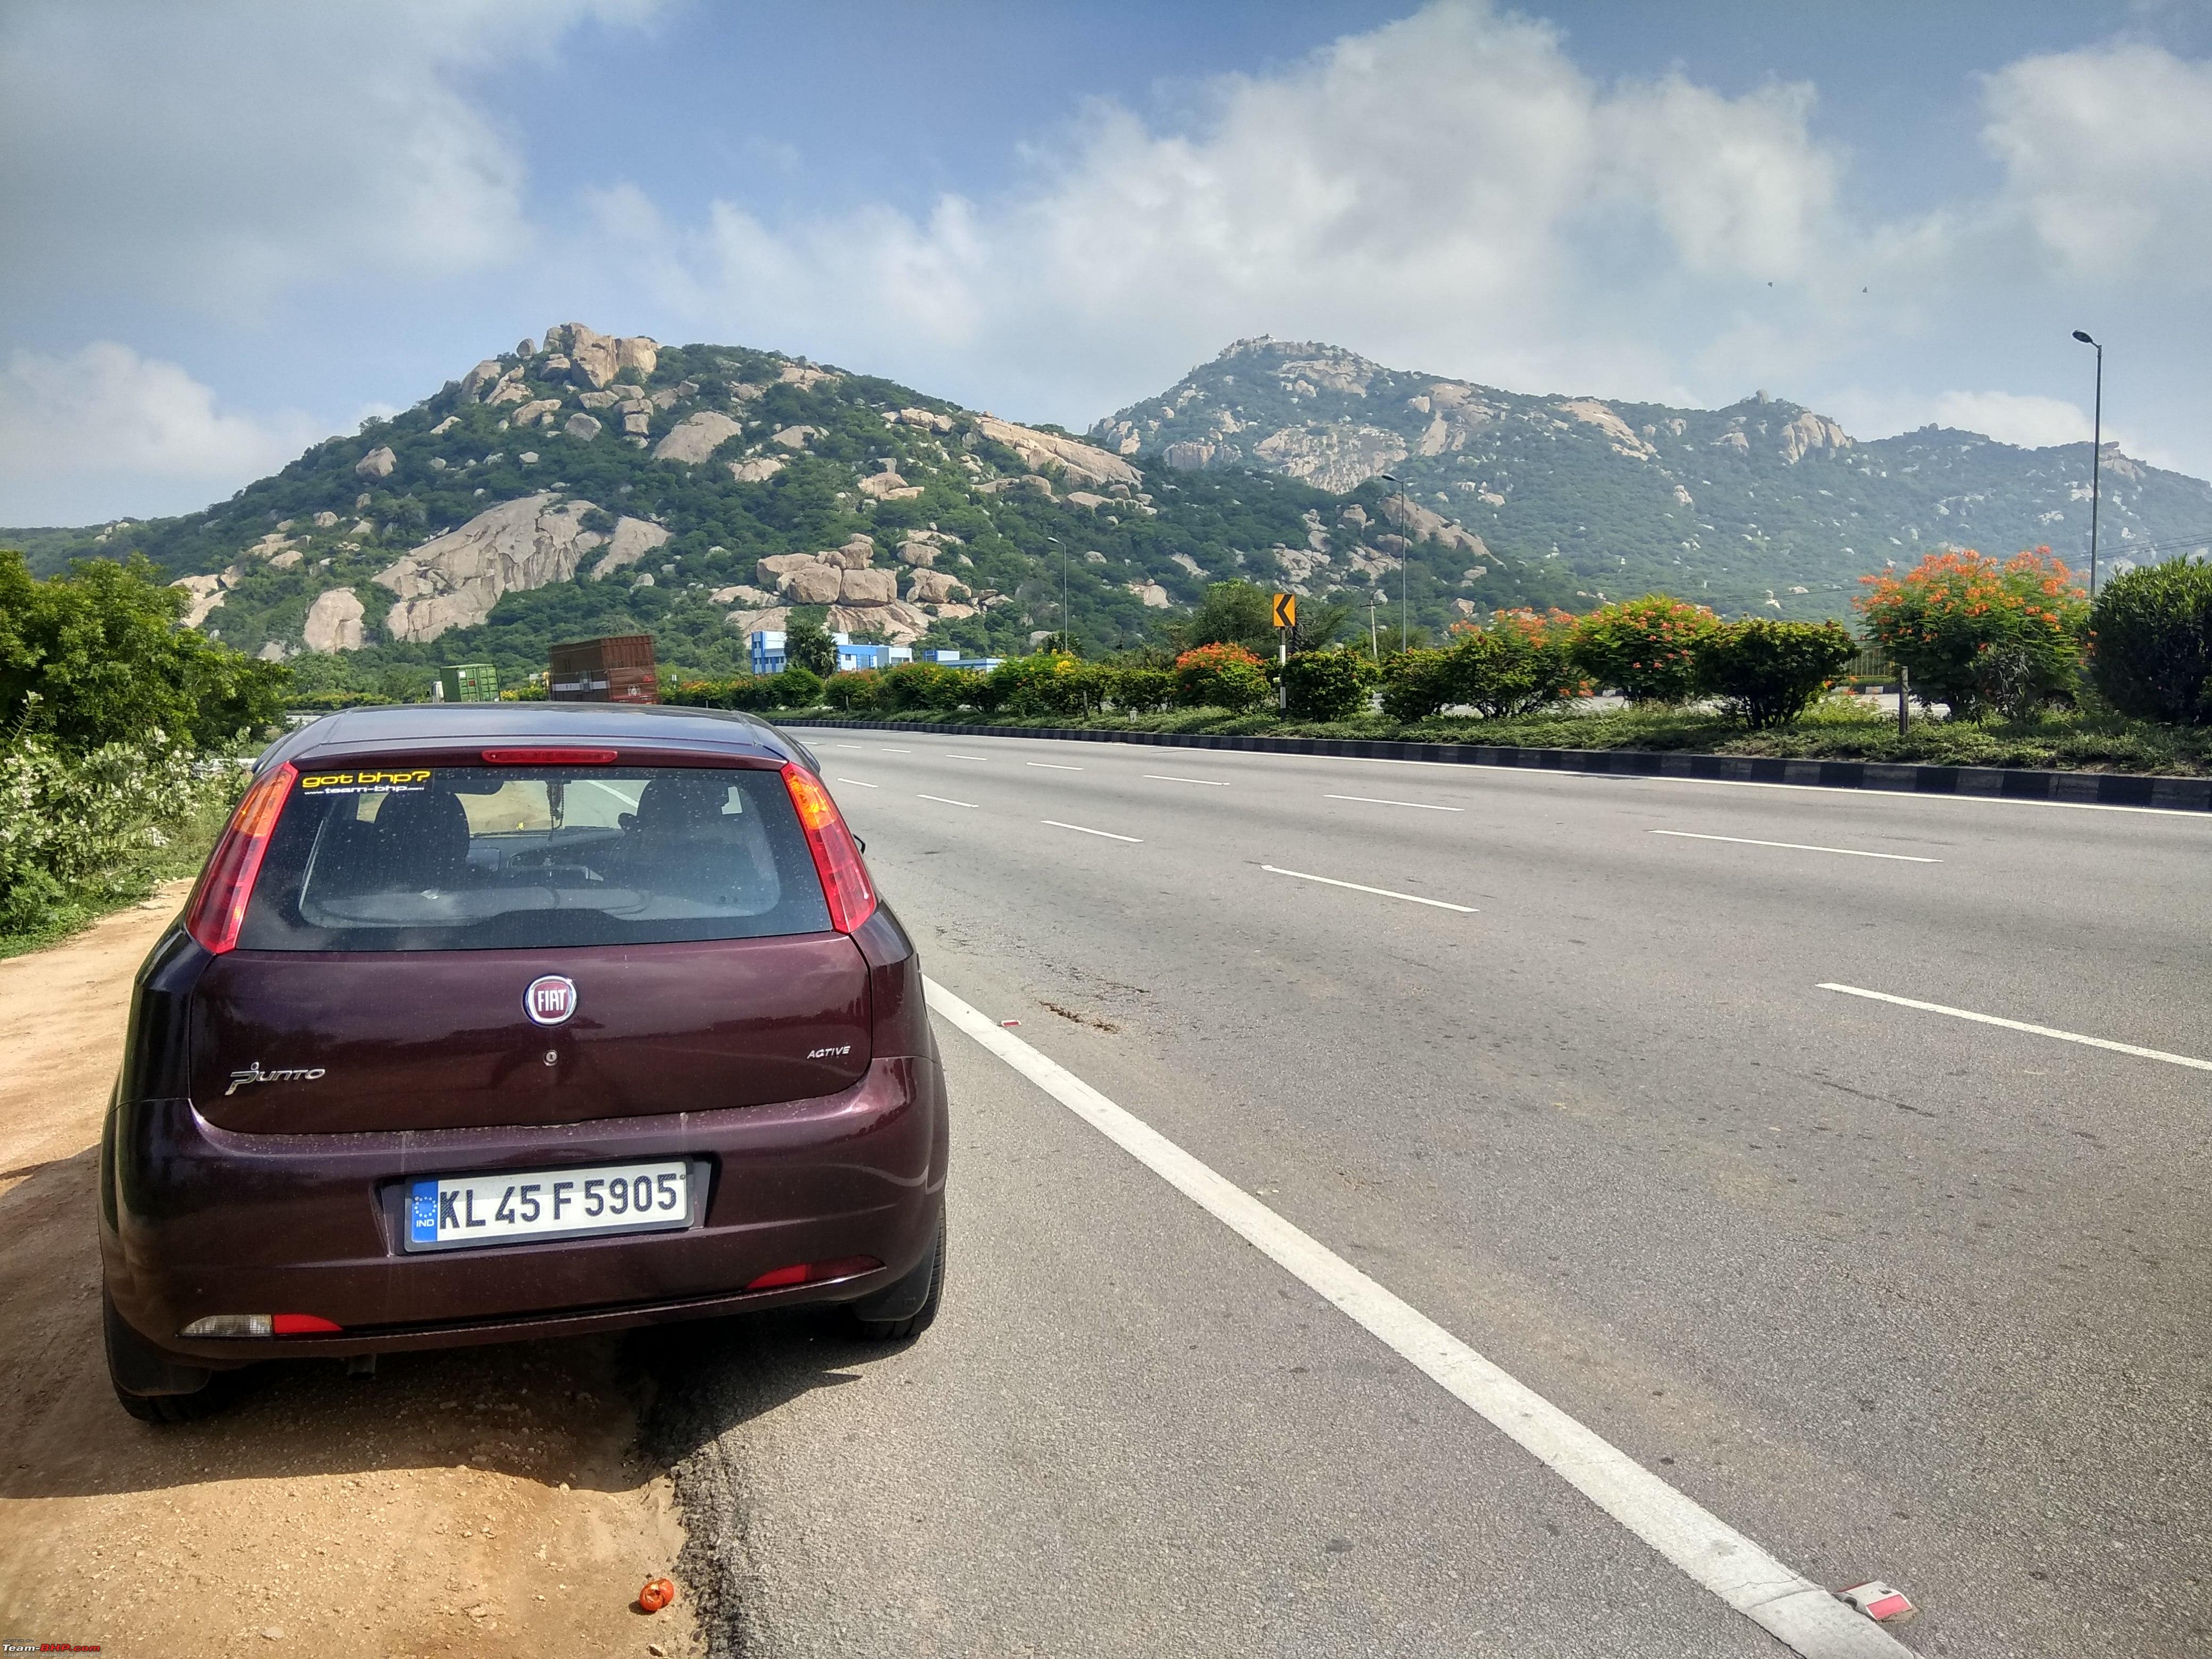 Fiat Punto discontinued in Europe - Team-BHP